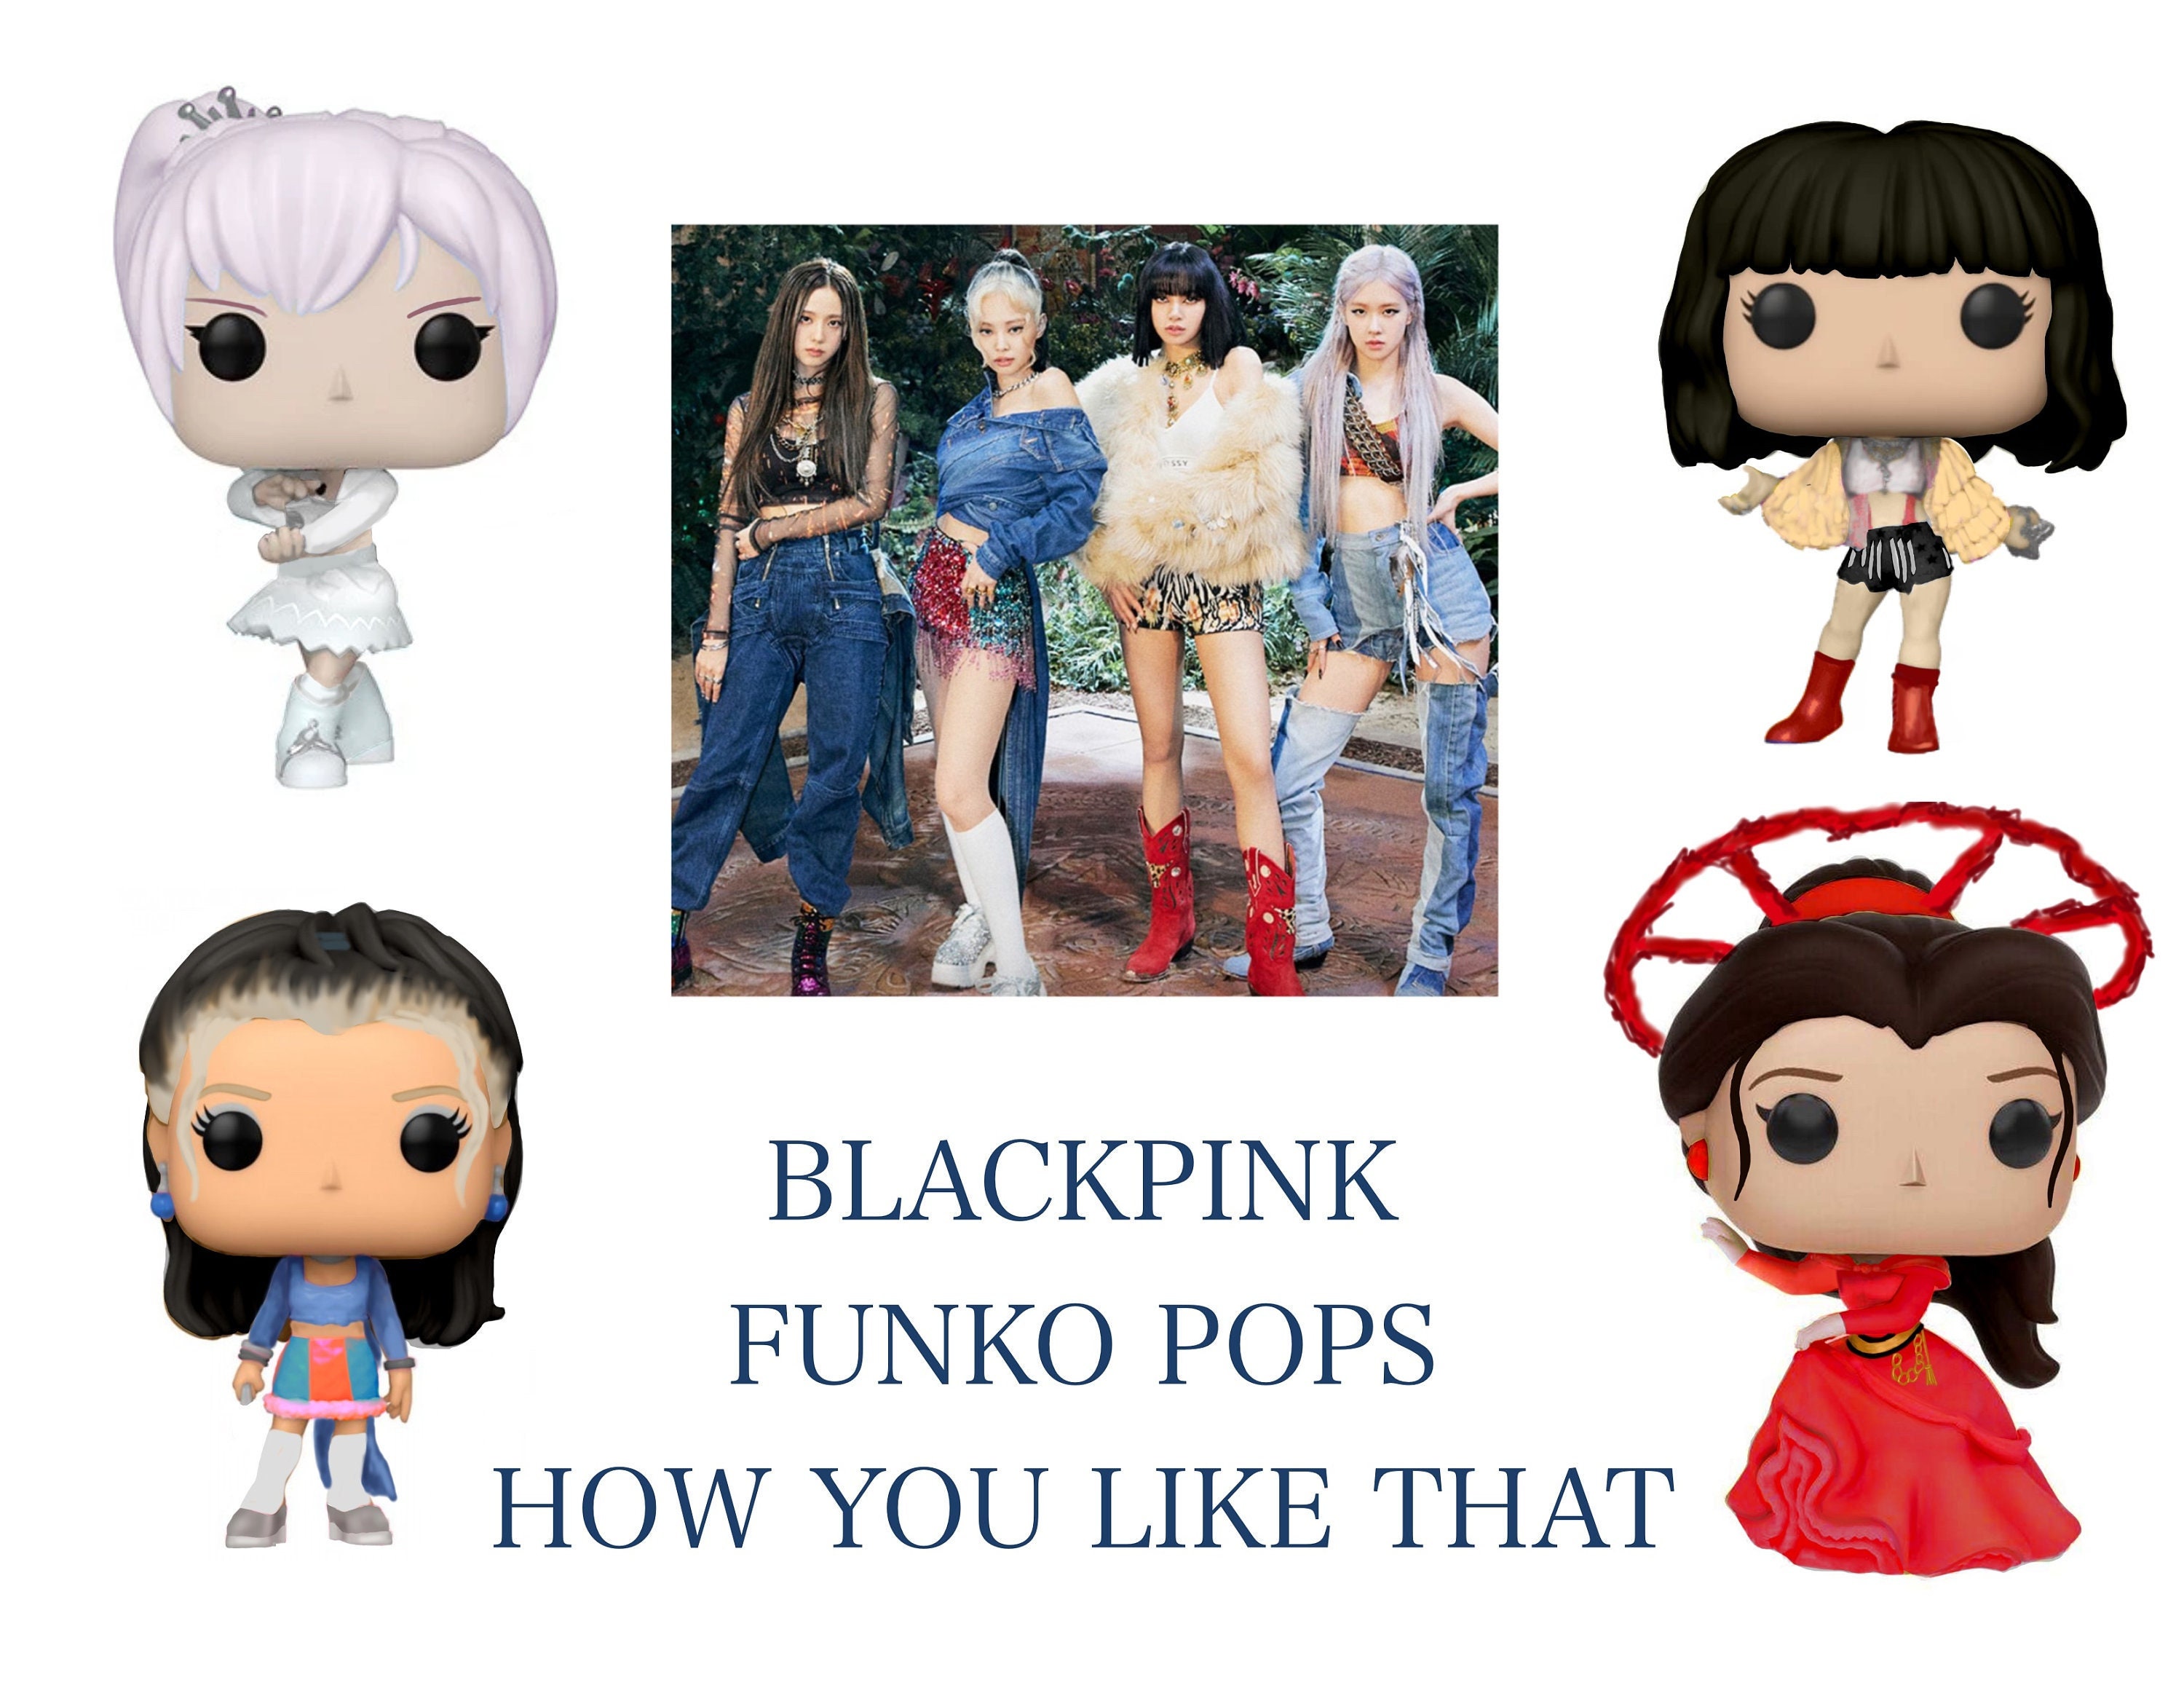 Blackpink 4体セット Funko Pop! フィギュア 新品 送料込